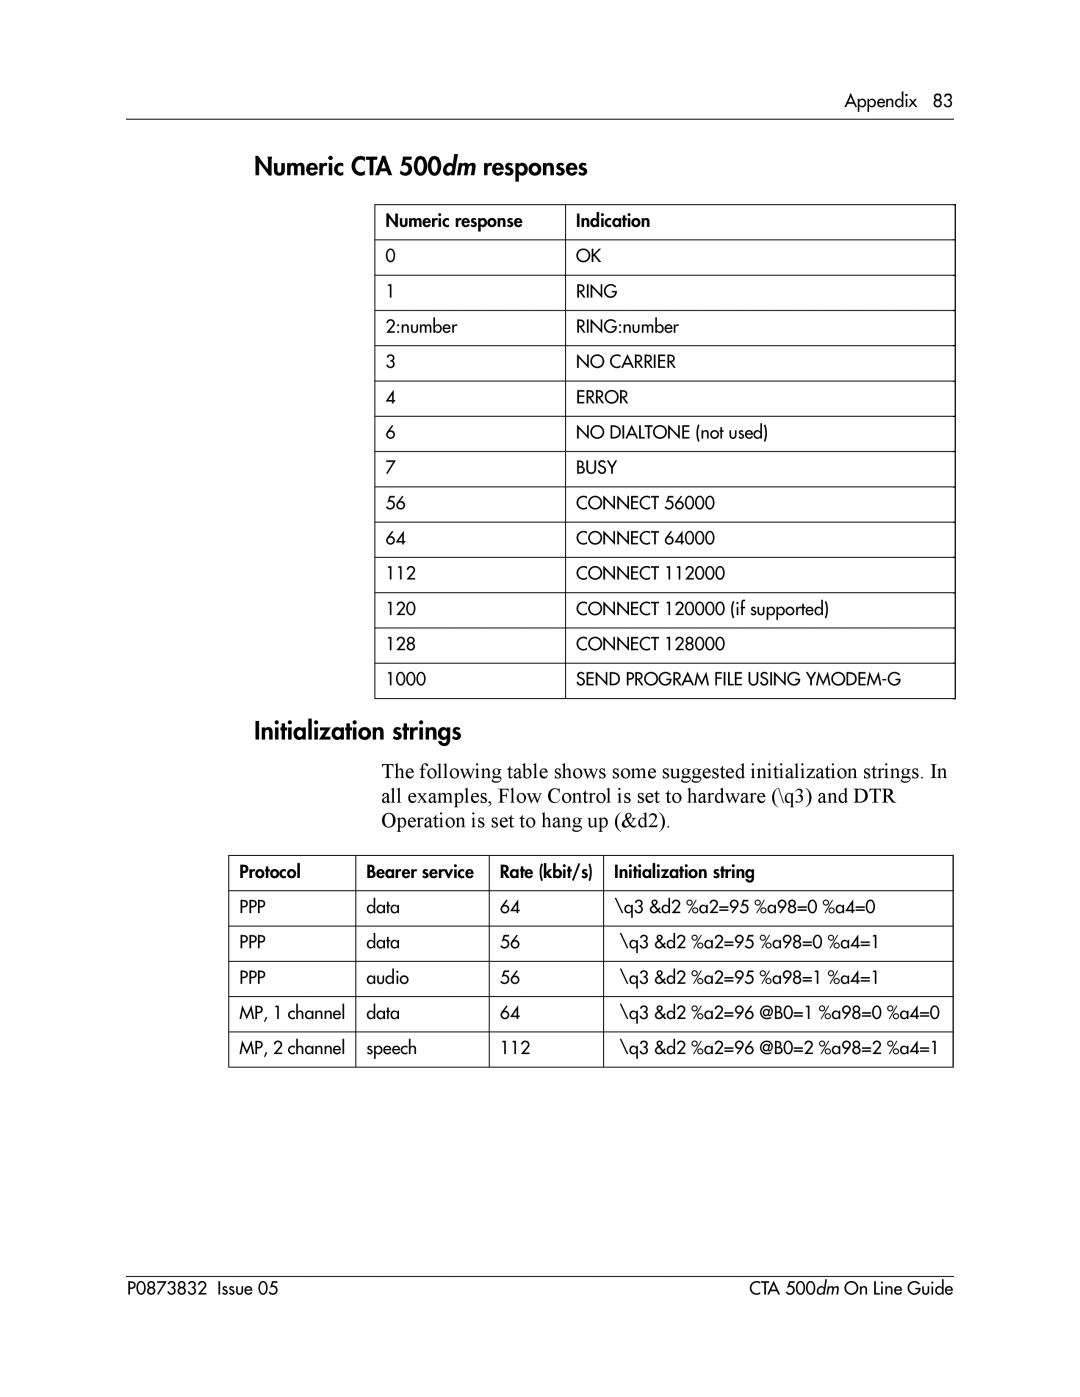 Nortel Networks manual Numeric CTA 500dm responses, Initialization strings 